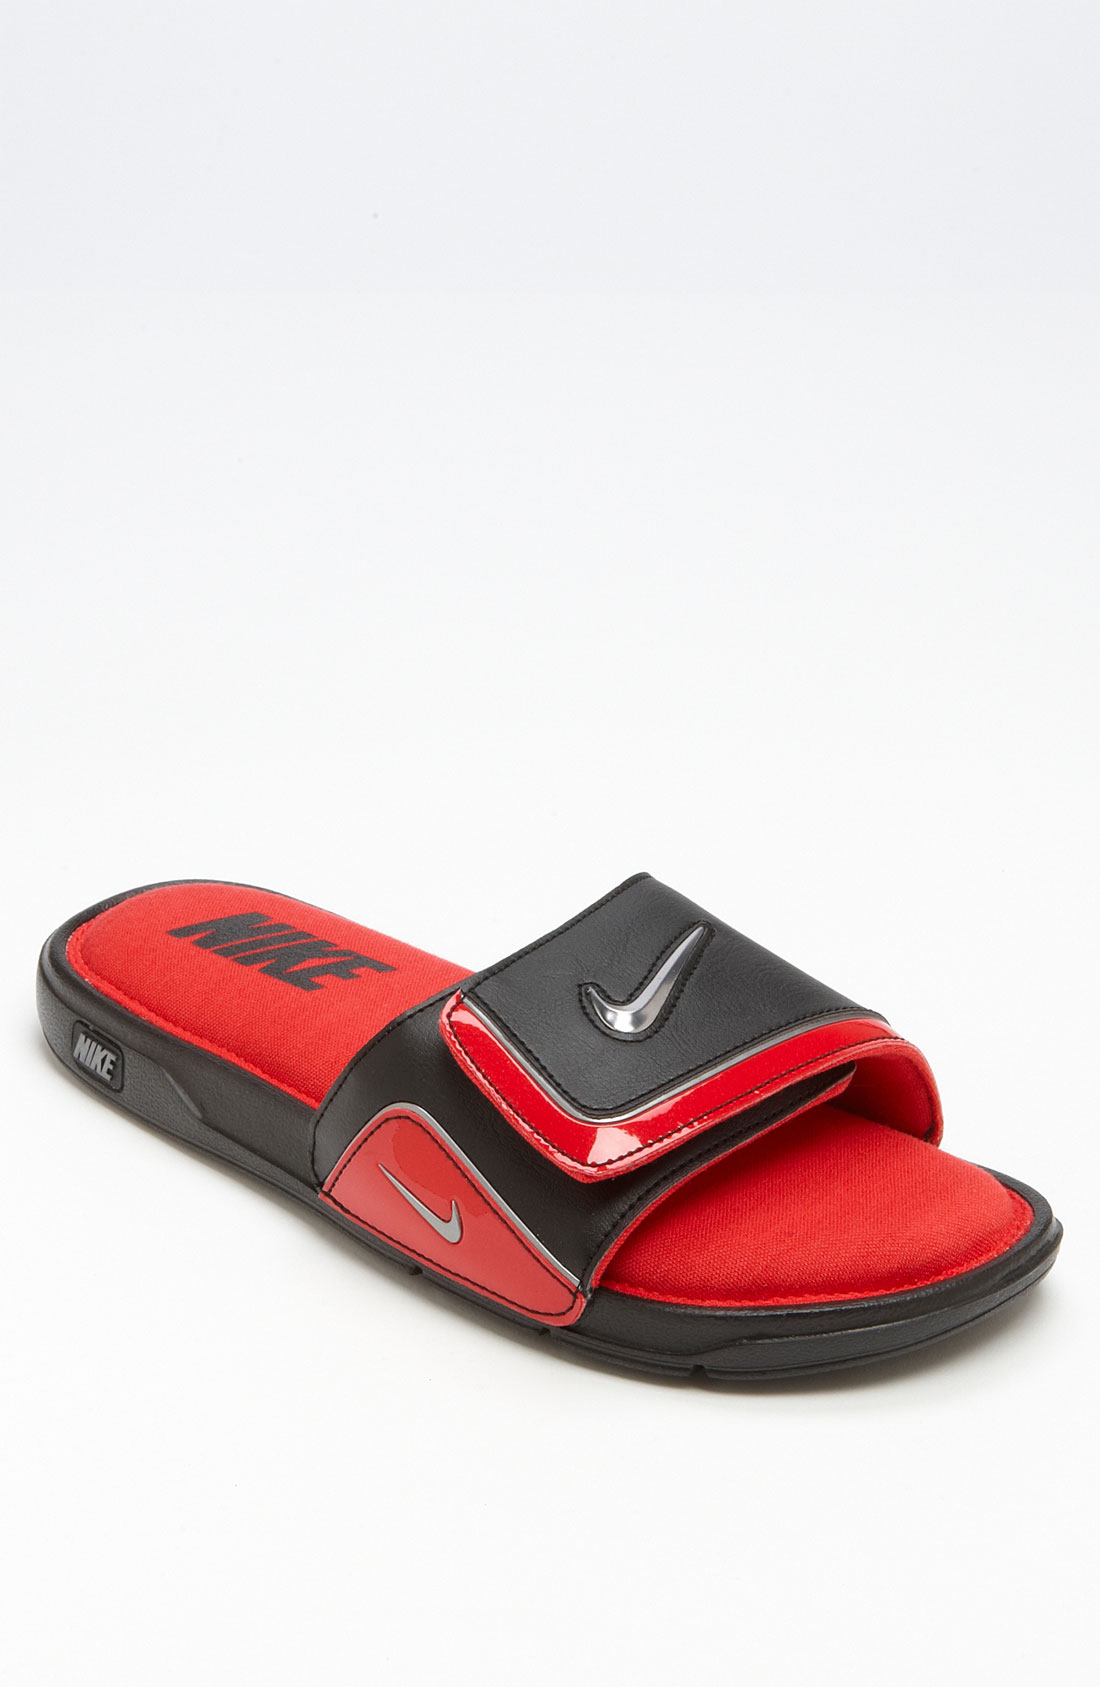 Ideas 80 of Nike Comfort Slide 2 Red